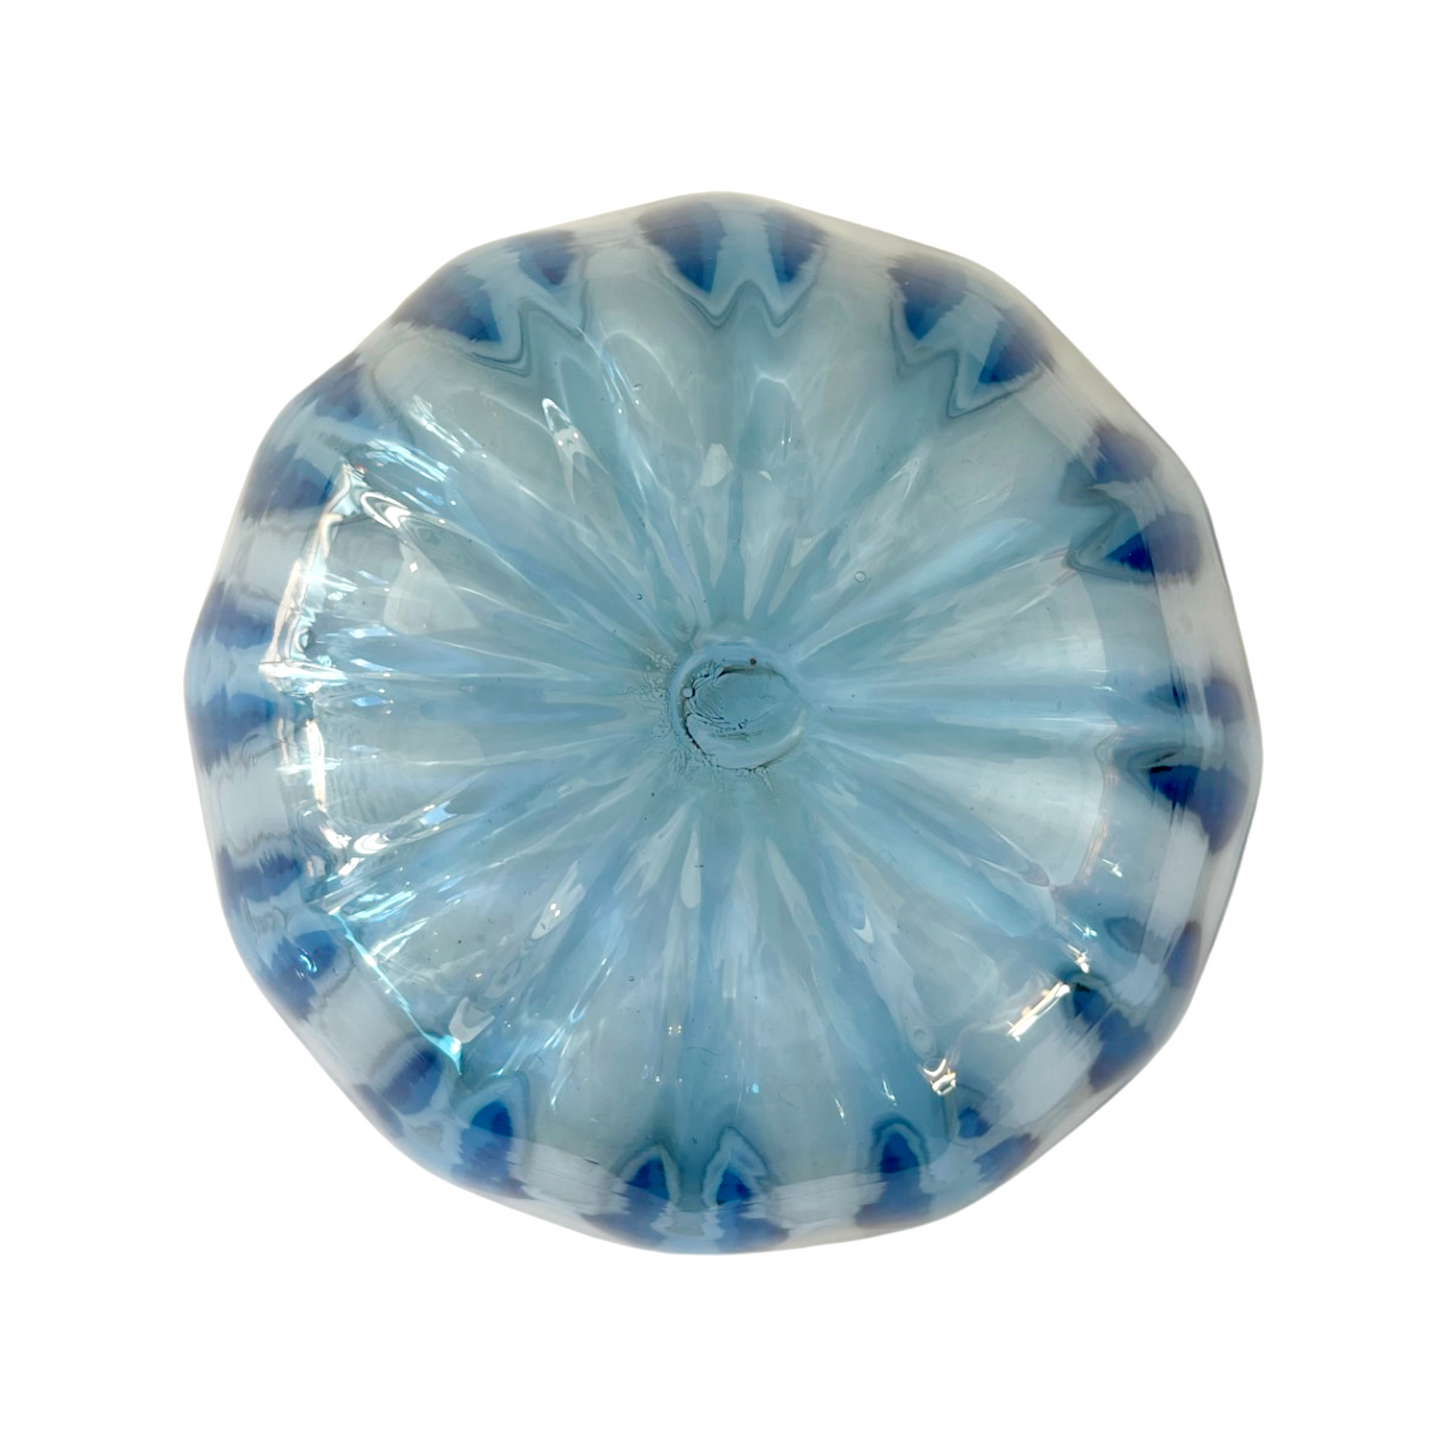 Light blue fluted glass bowl